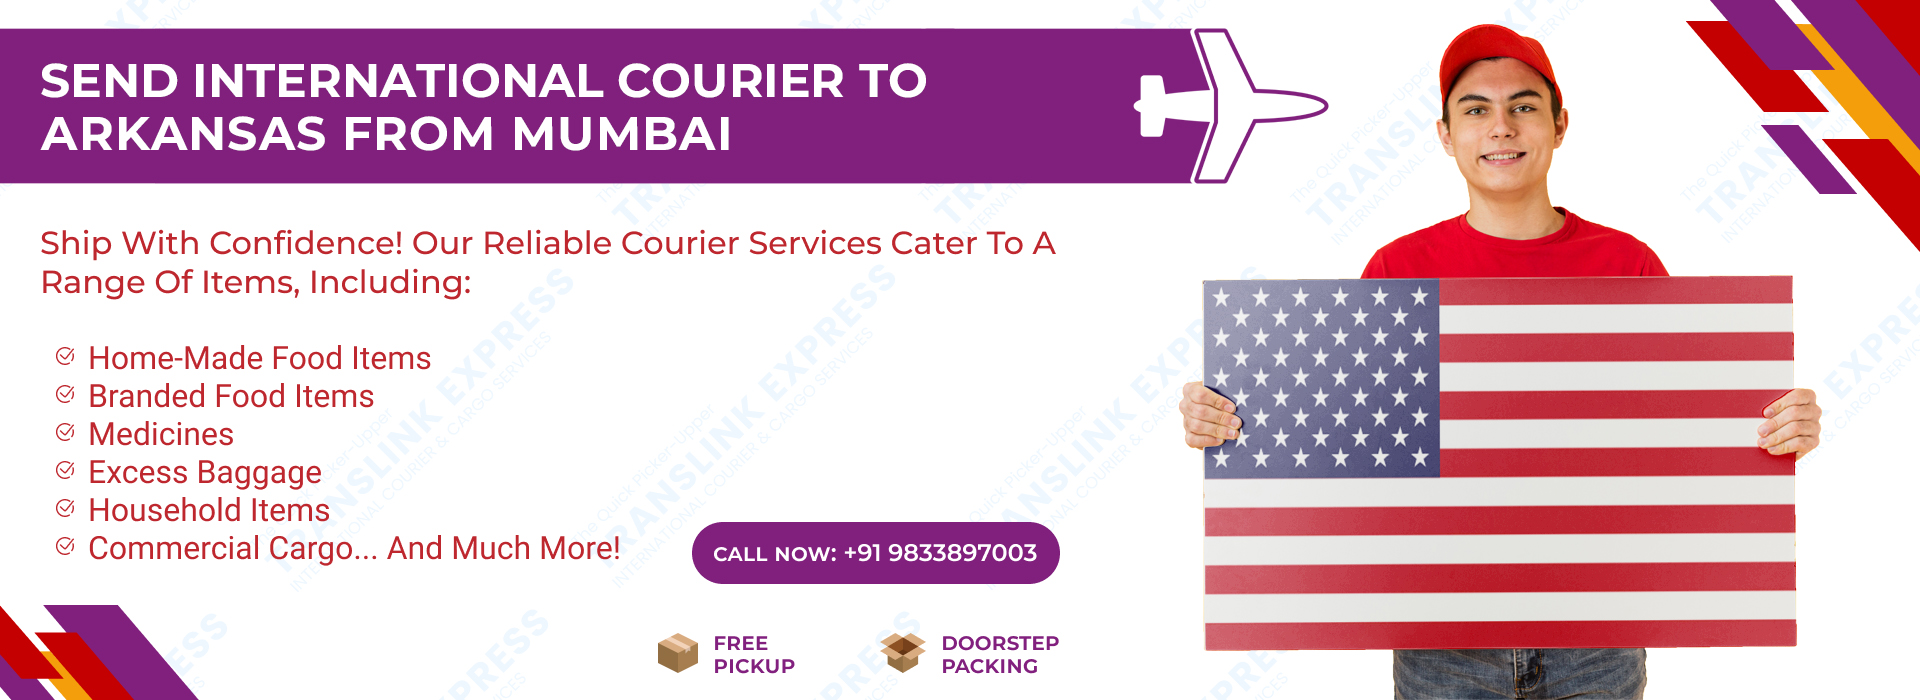 Courier to Arkansas From Mumbai